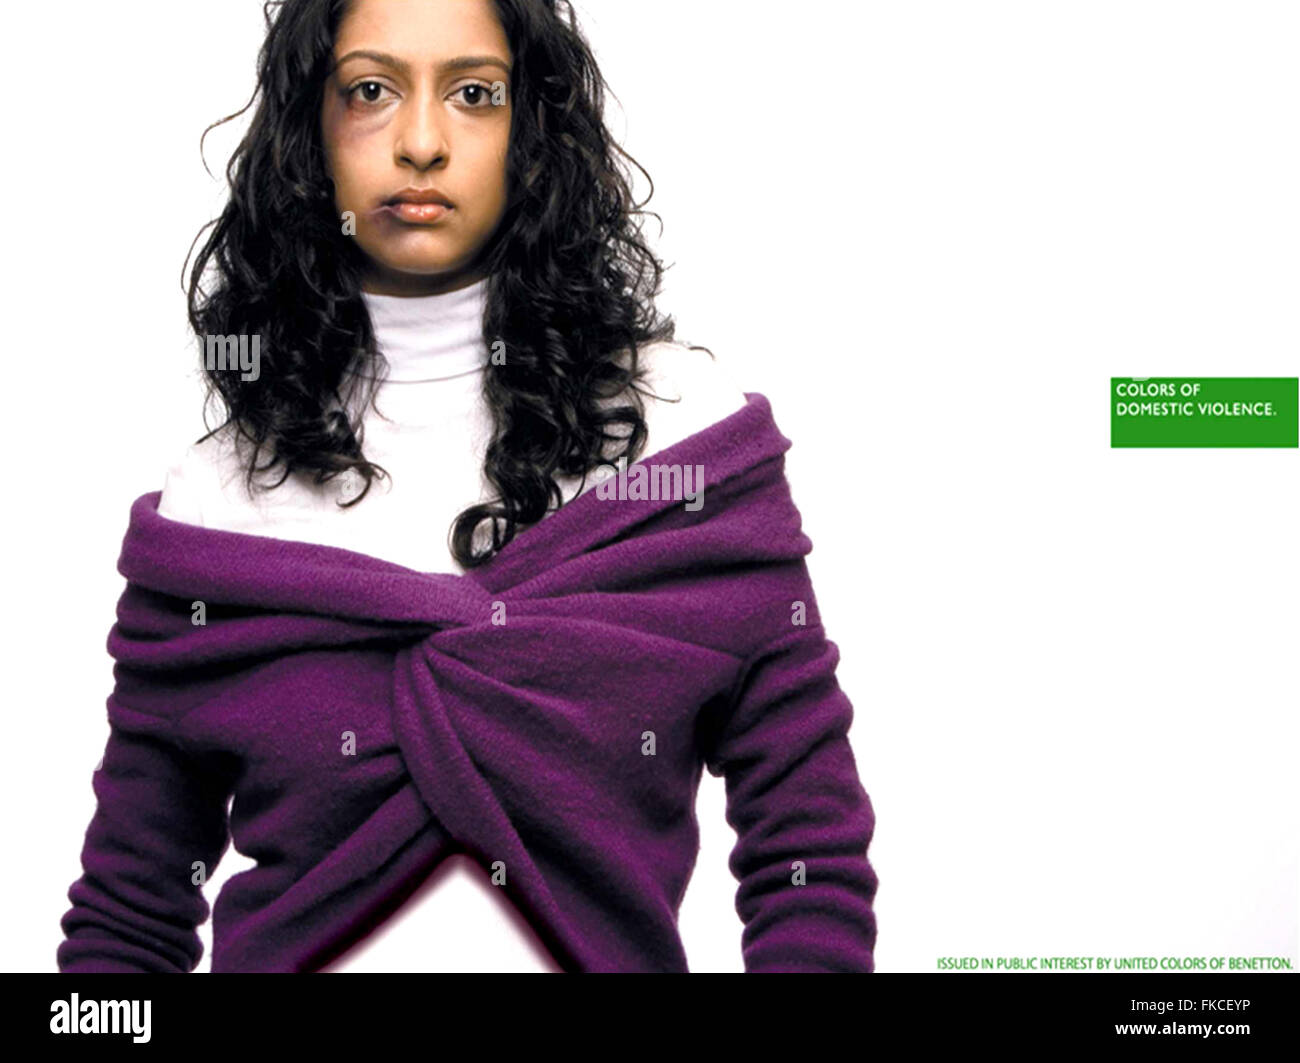 2000s UK colores unidos de Benetton Revista anuncio Fotografía de stock -  Alamy